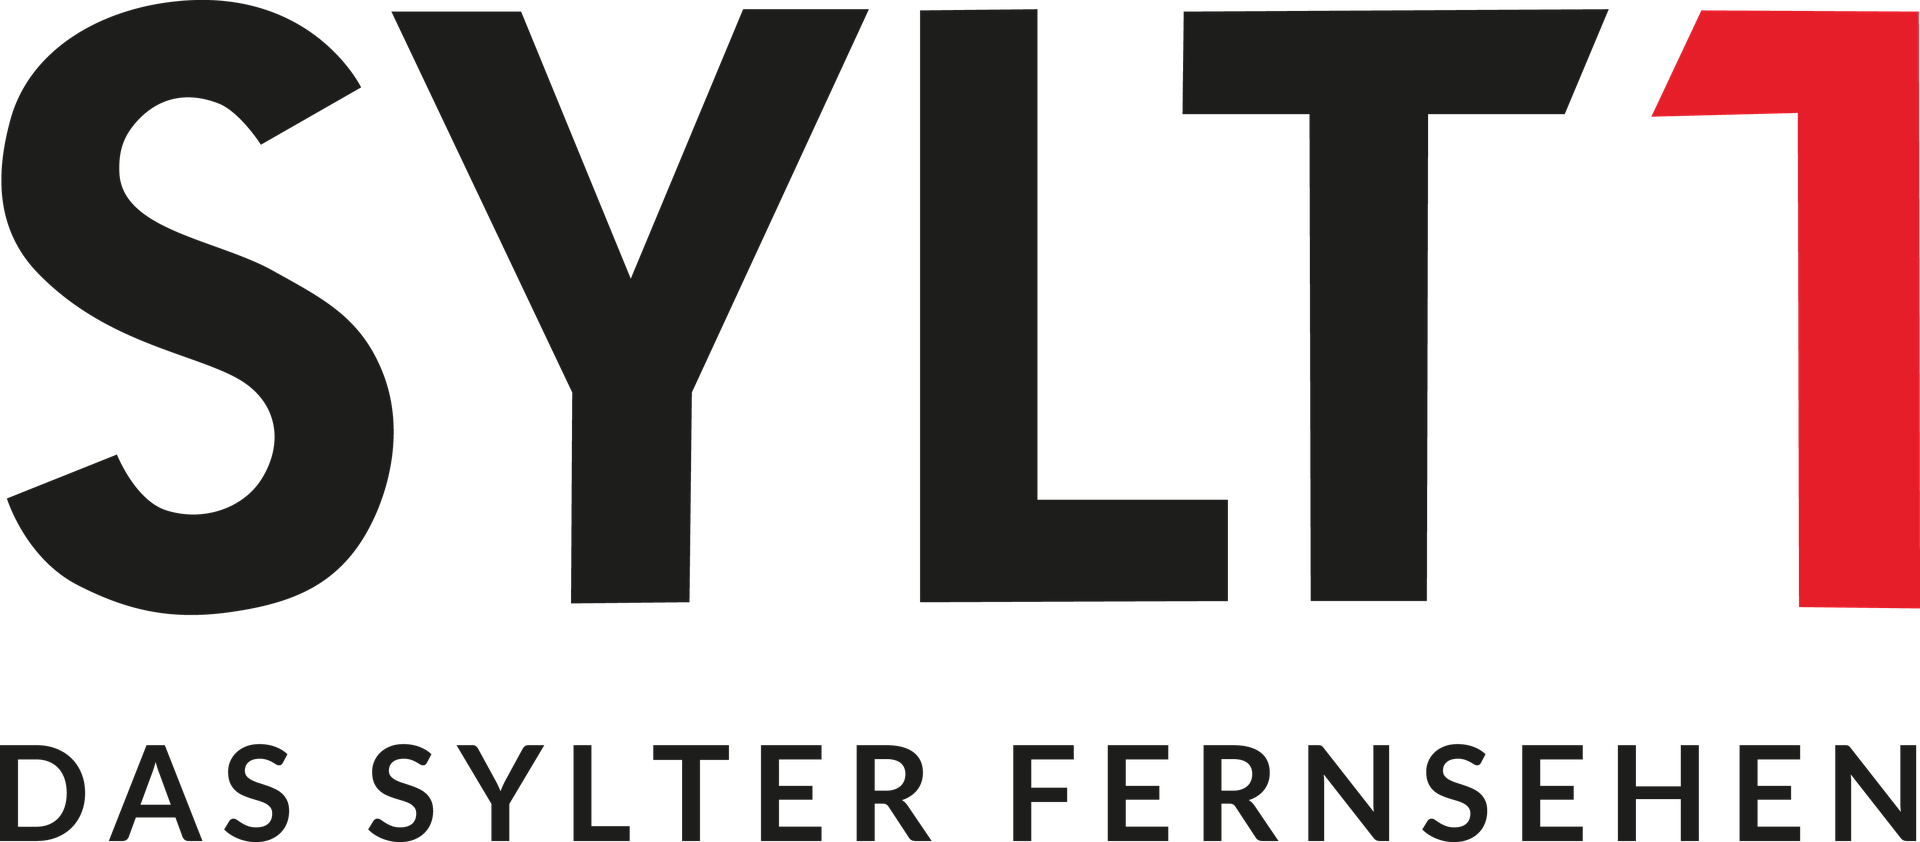 Sylt1 Logo.png